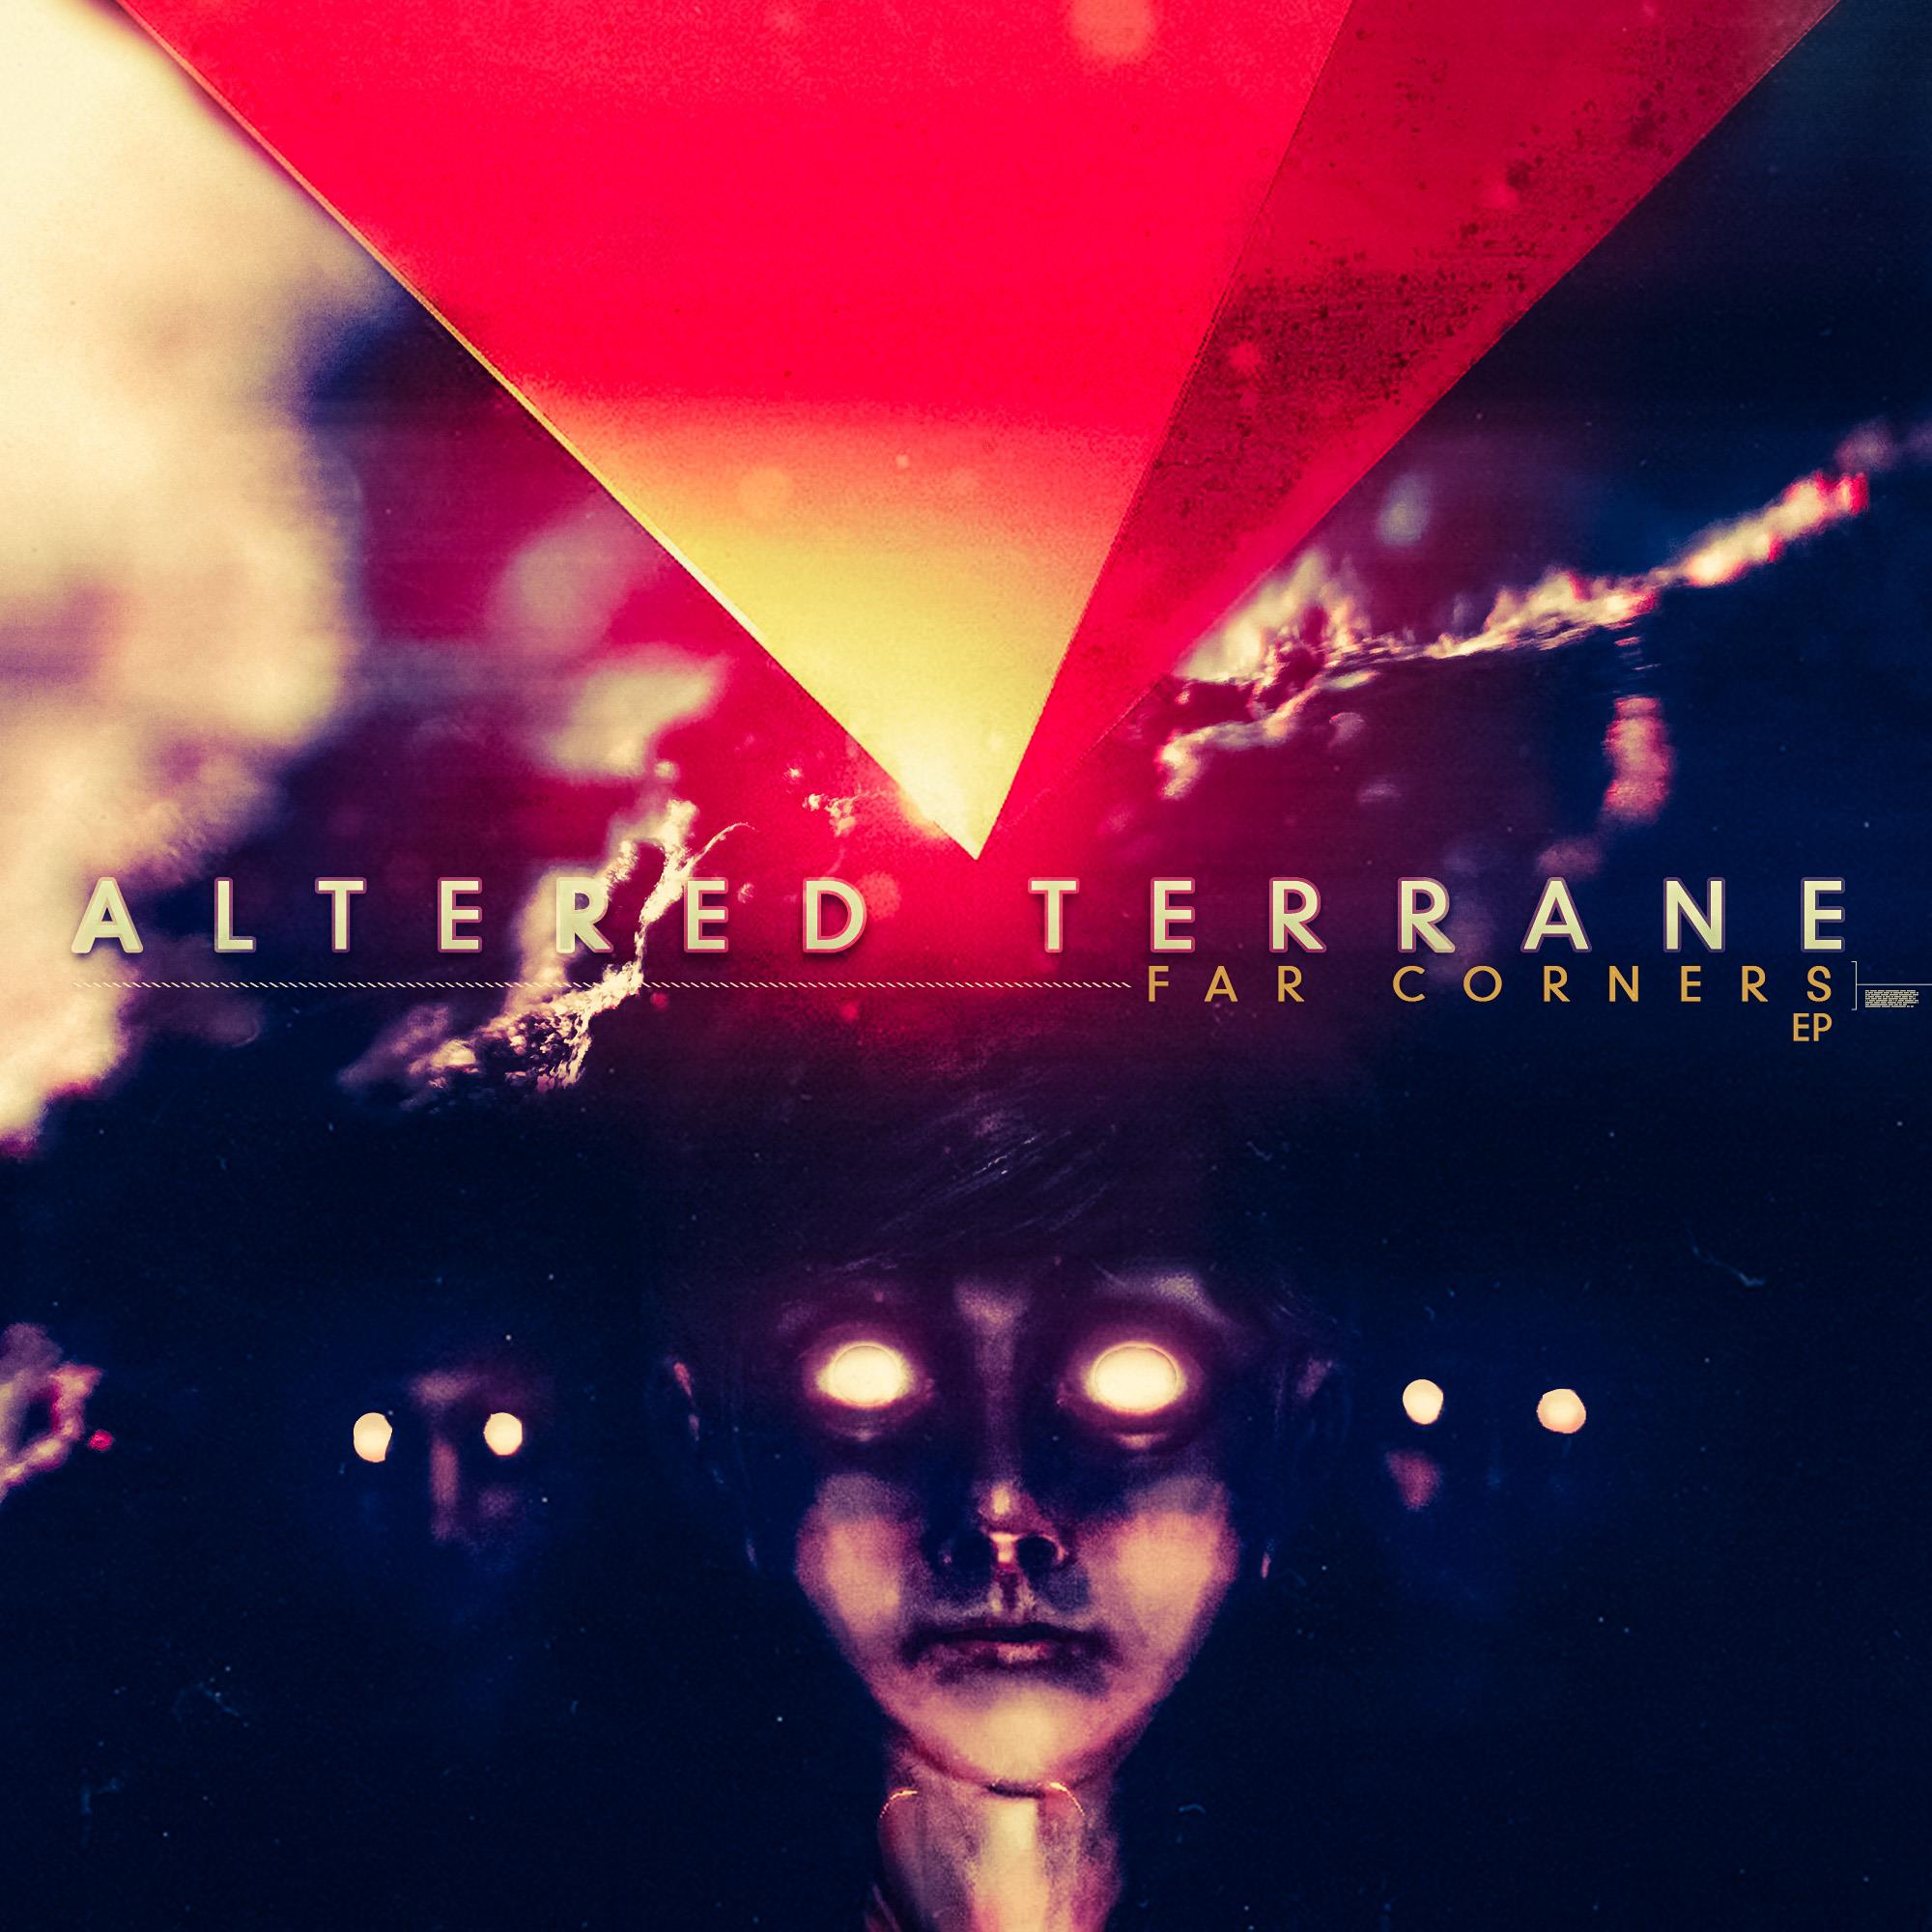 Drum & Bass With Interstellar Aesthetics: Altered Terrane – Far Corners EP